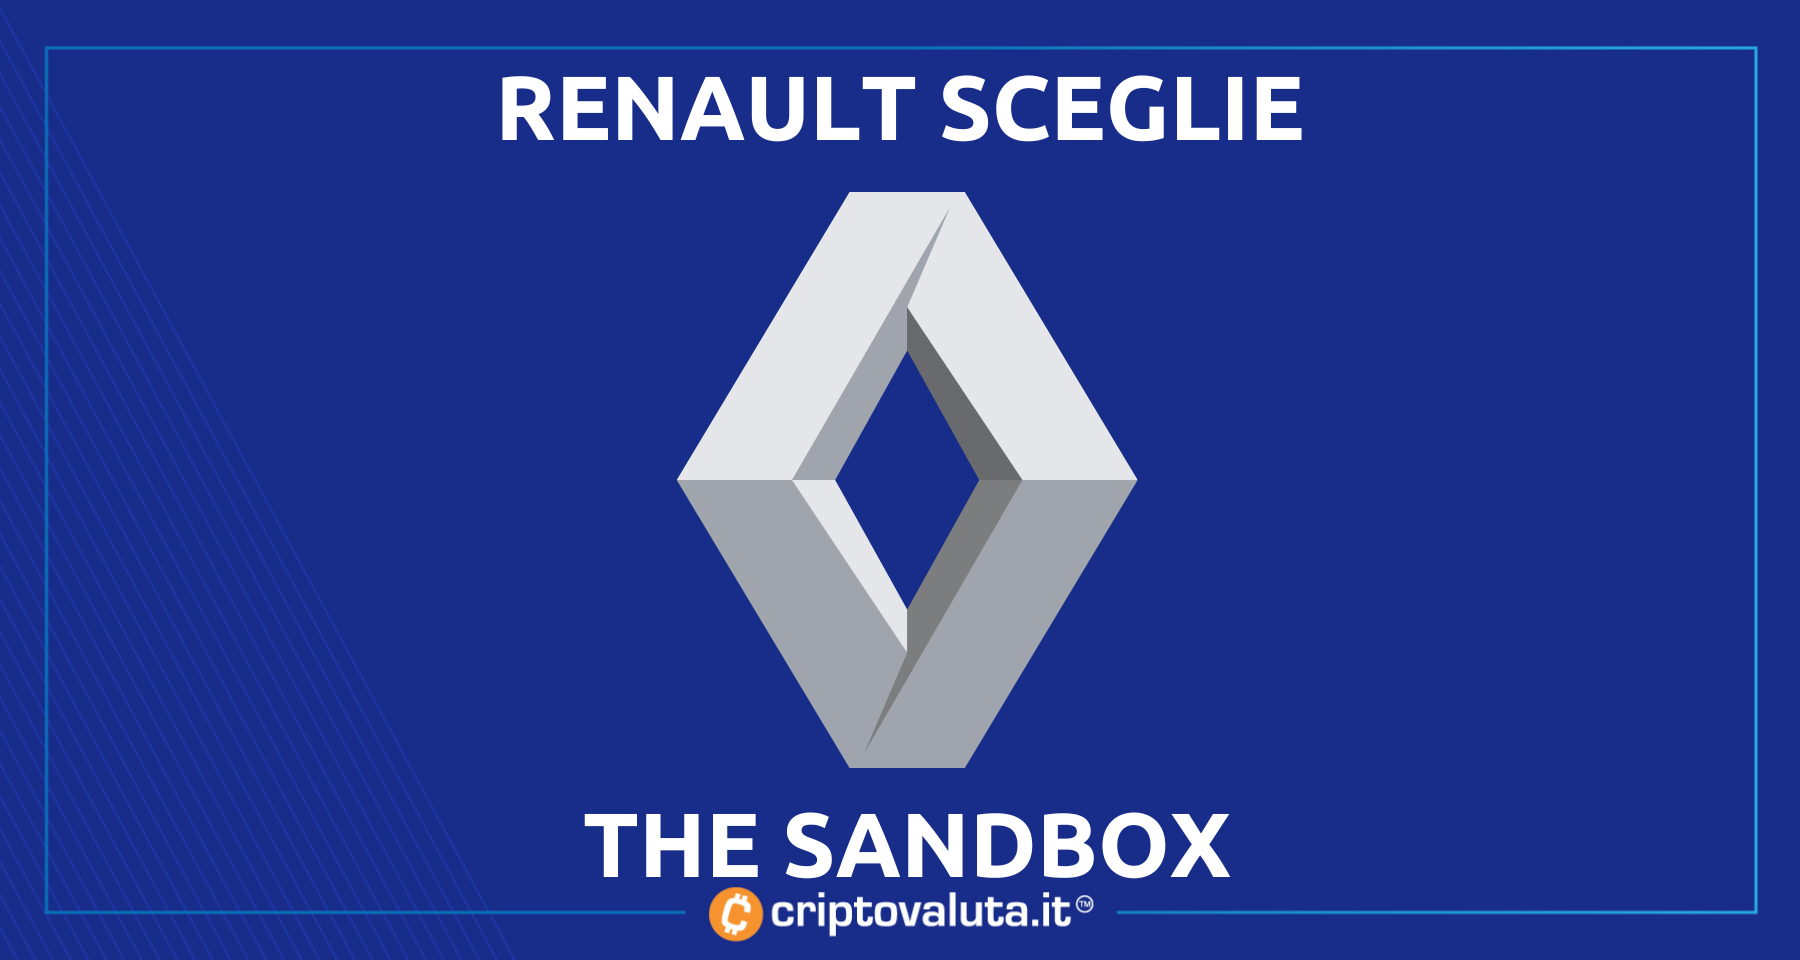 Sandbox: arriva Renault Corea! | Nuova notizia bullish per $SAND